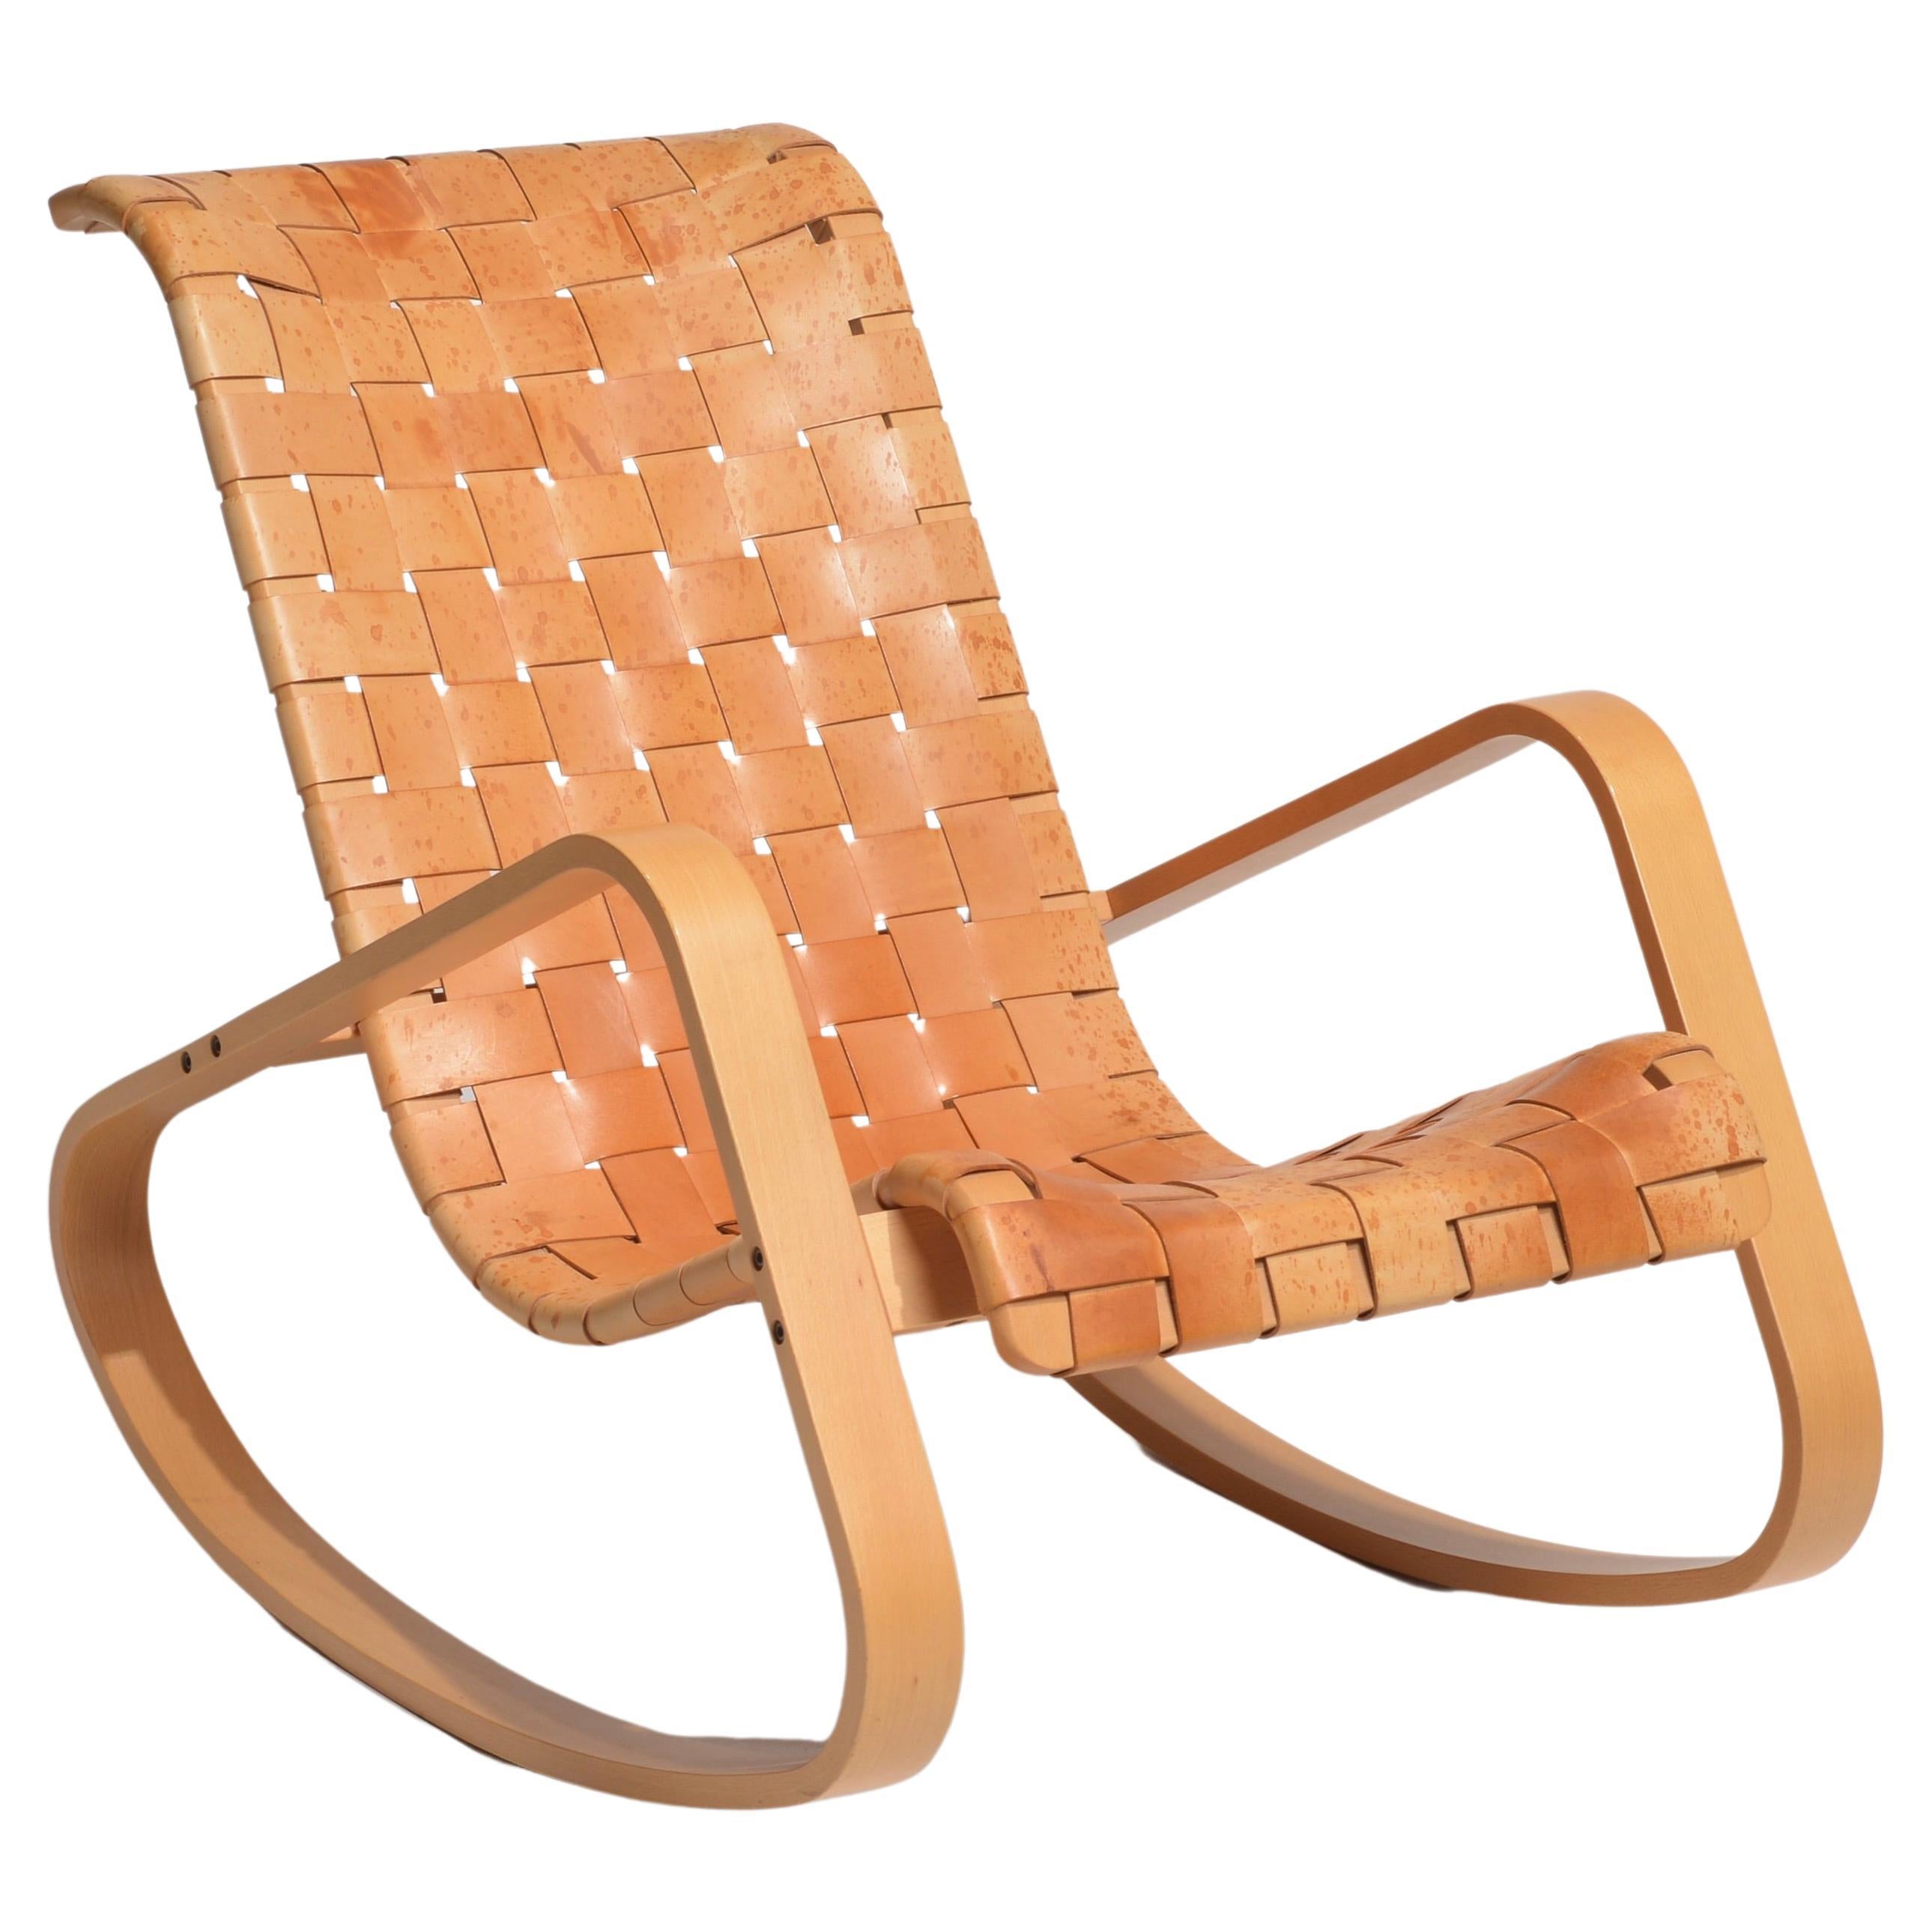 Luigi Crassevig ‘Dondolo’ Bentwood and Woven Leather Rocking Chair for Crassevig